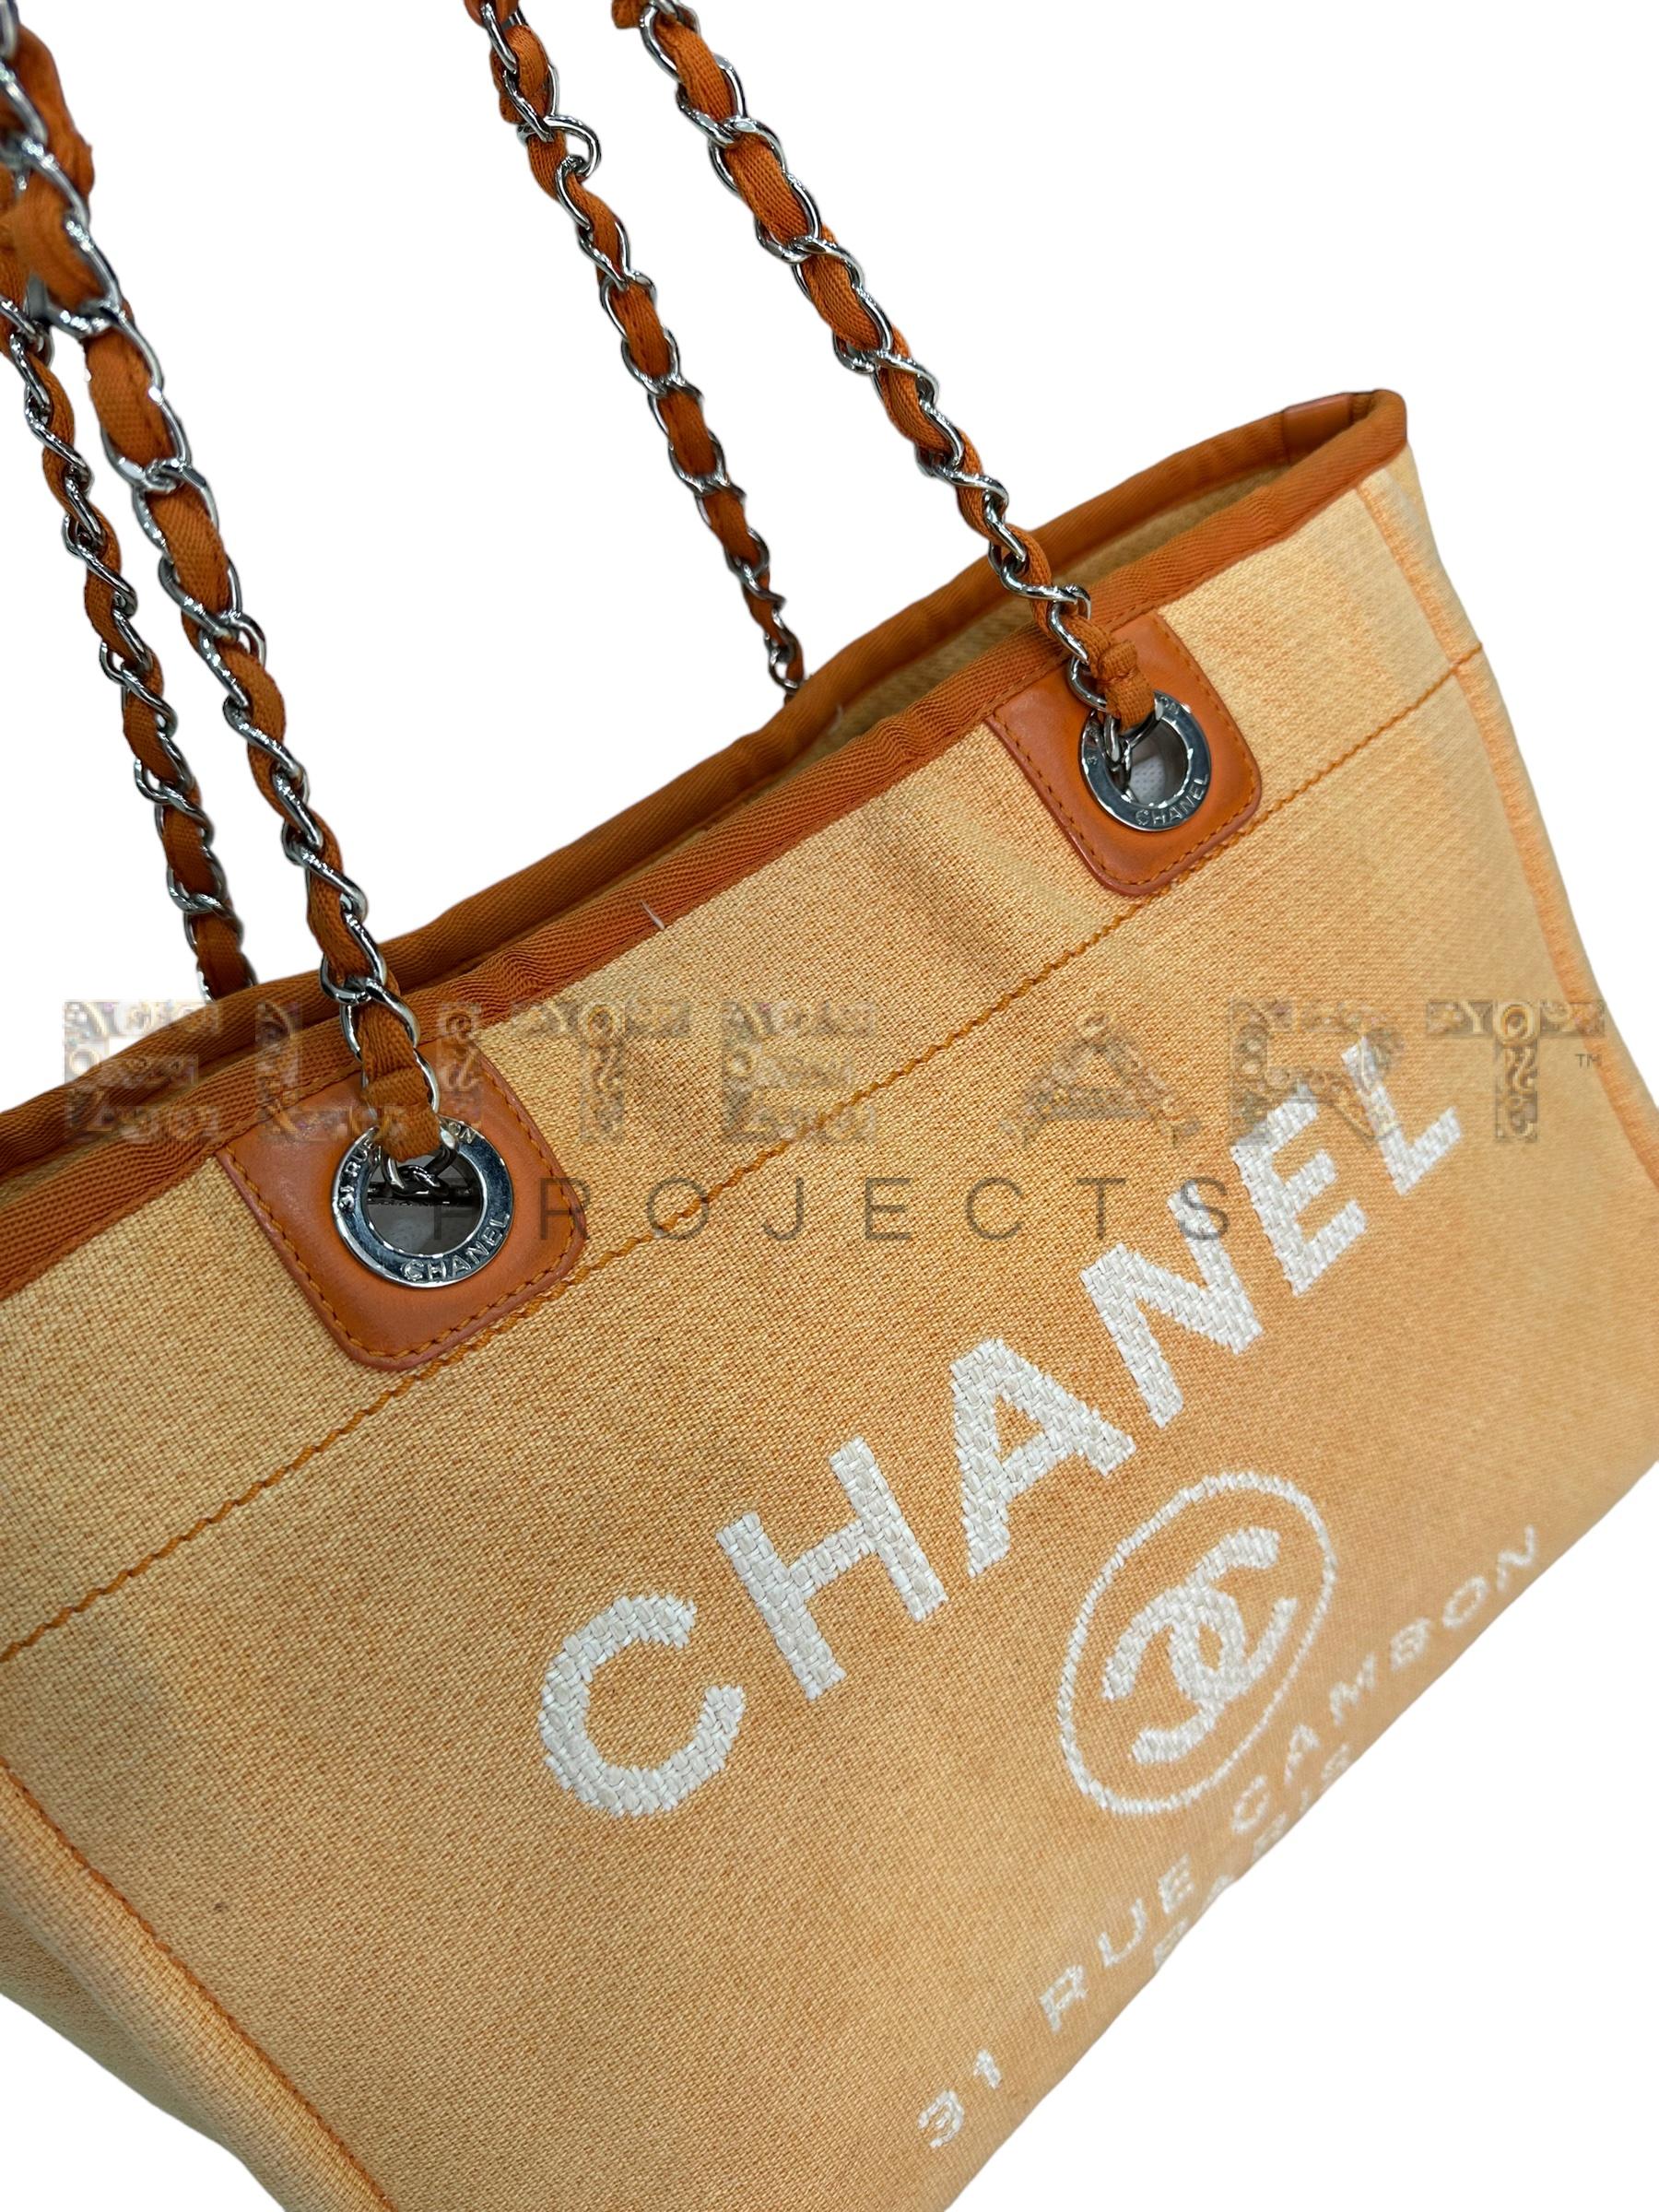 Chanel, Deauville, tote, orange canvas, silver hardware, magnetic closure, spacious